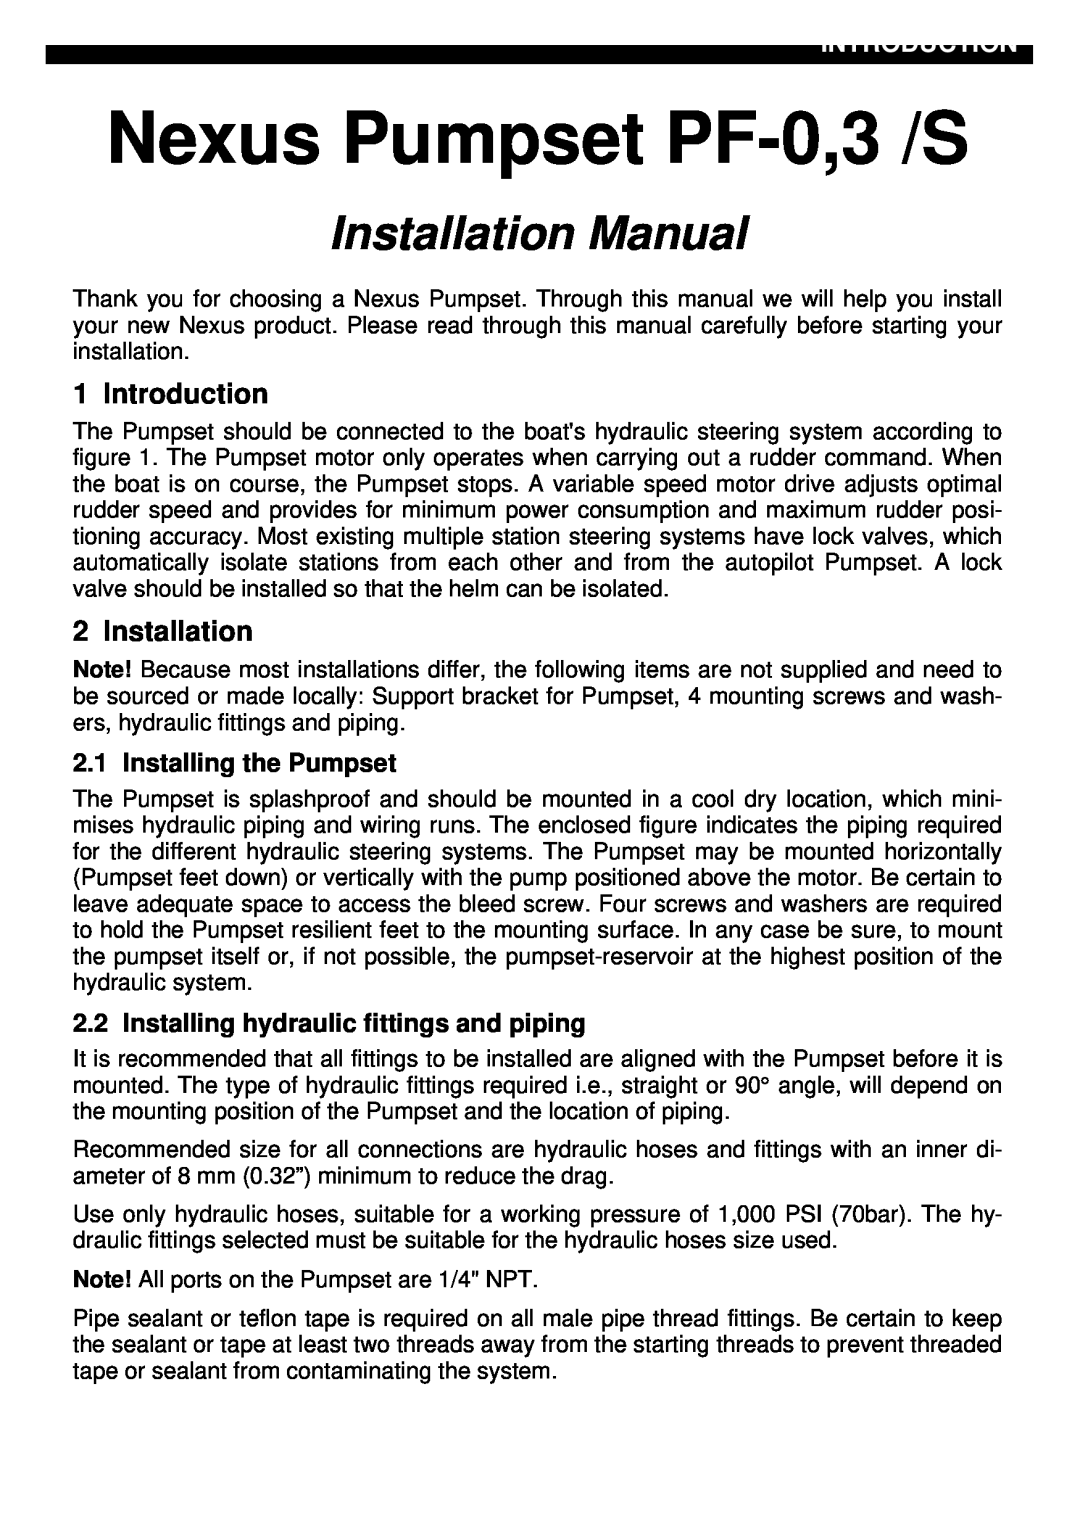 Nexus 21 installation manual Introduction, Installation, Installing the Pumpset, Nexus Pumpset PF-0,3 /S 